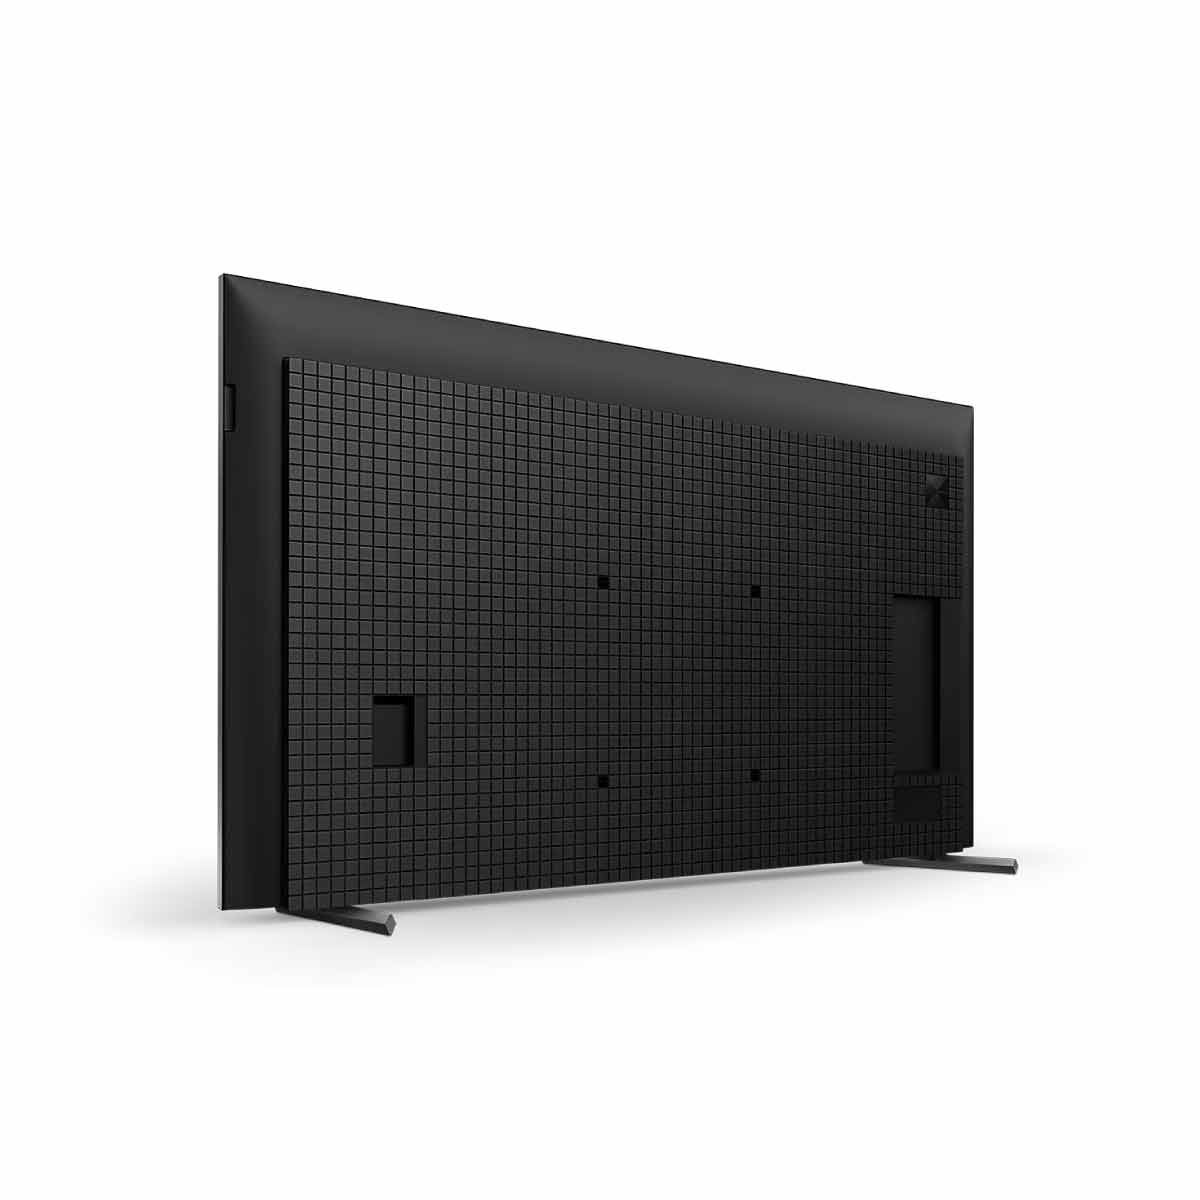 SONY Bravia XR LED Google TV 4K รุ่น XR-55X90L  Full Array LED สมาร์ททีวี 55 นิ้ว X90L Series 120Hz ปี2023